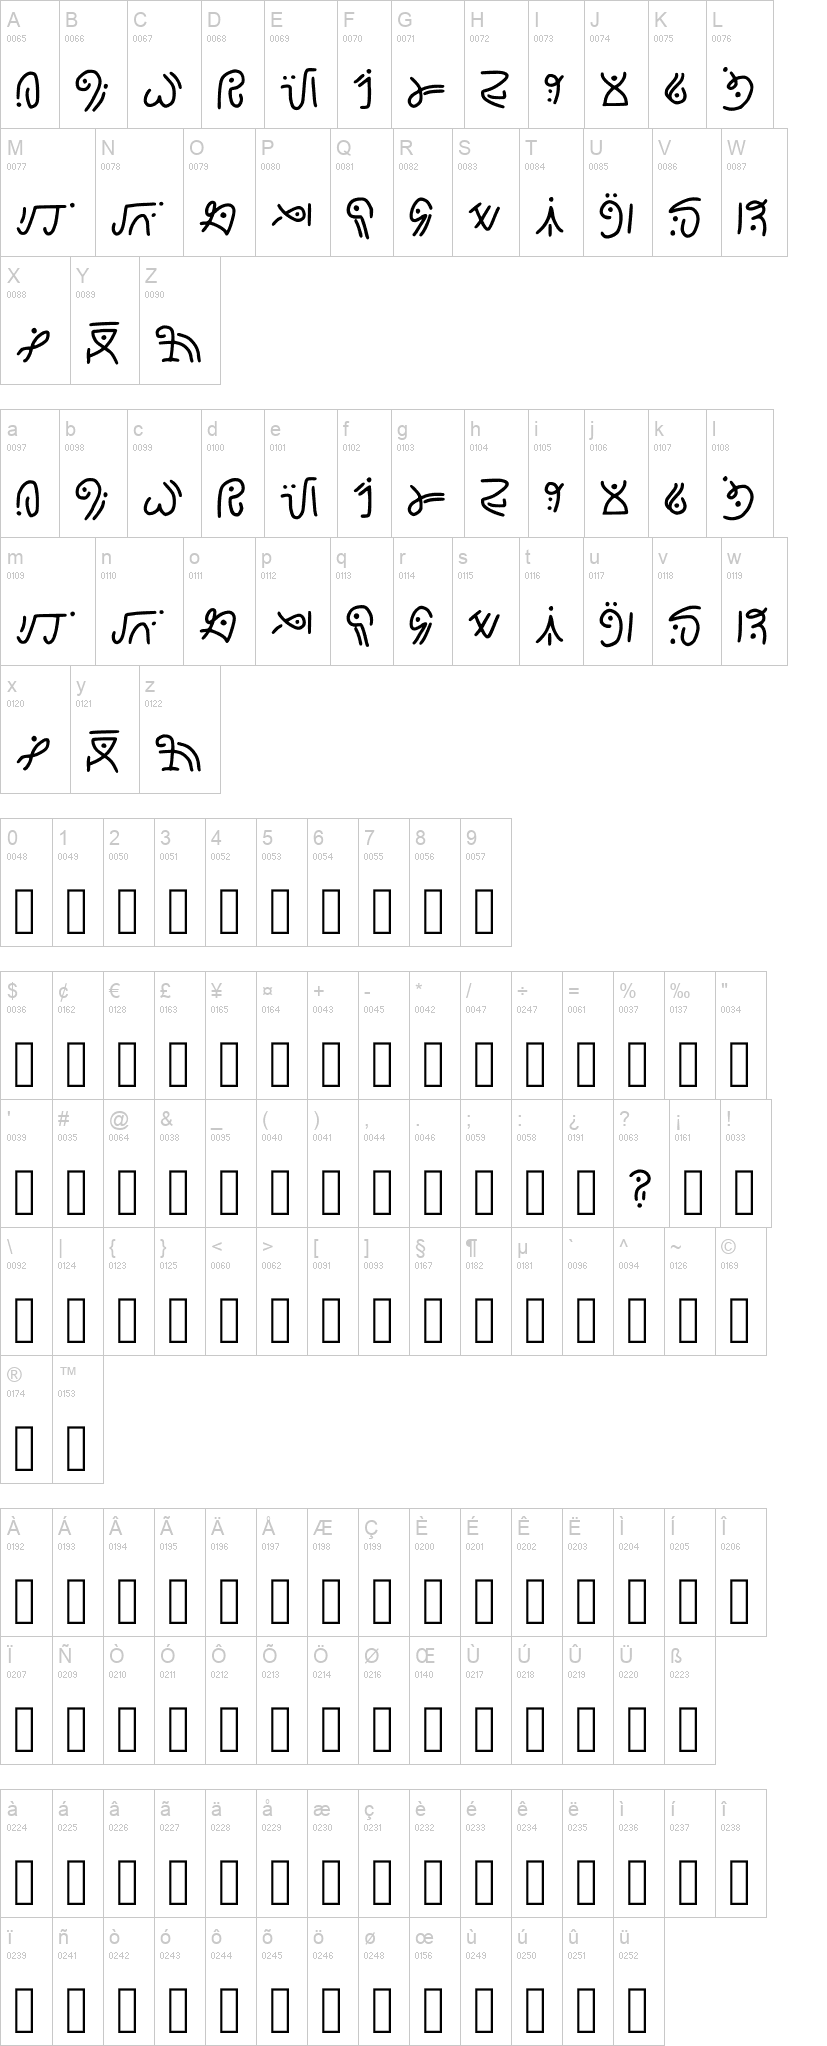 Amphibia Runes